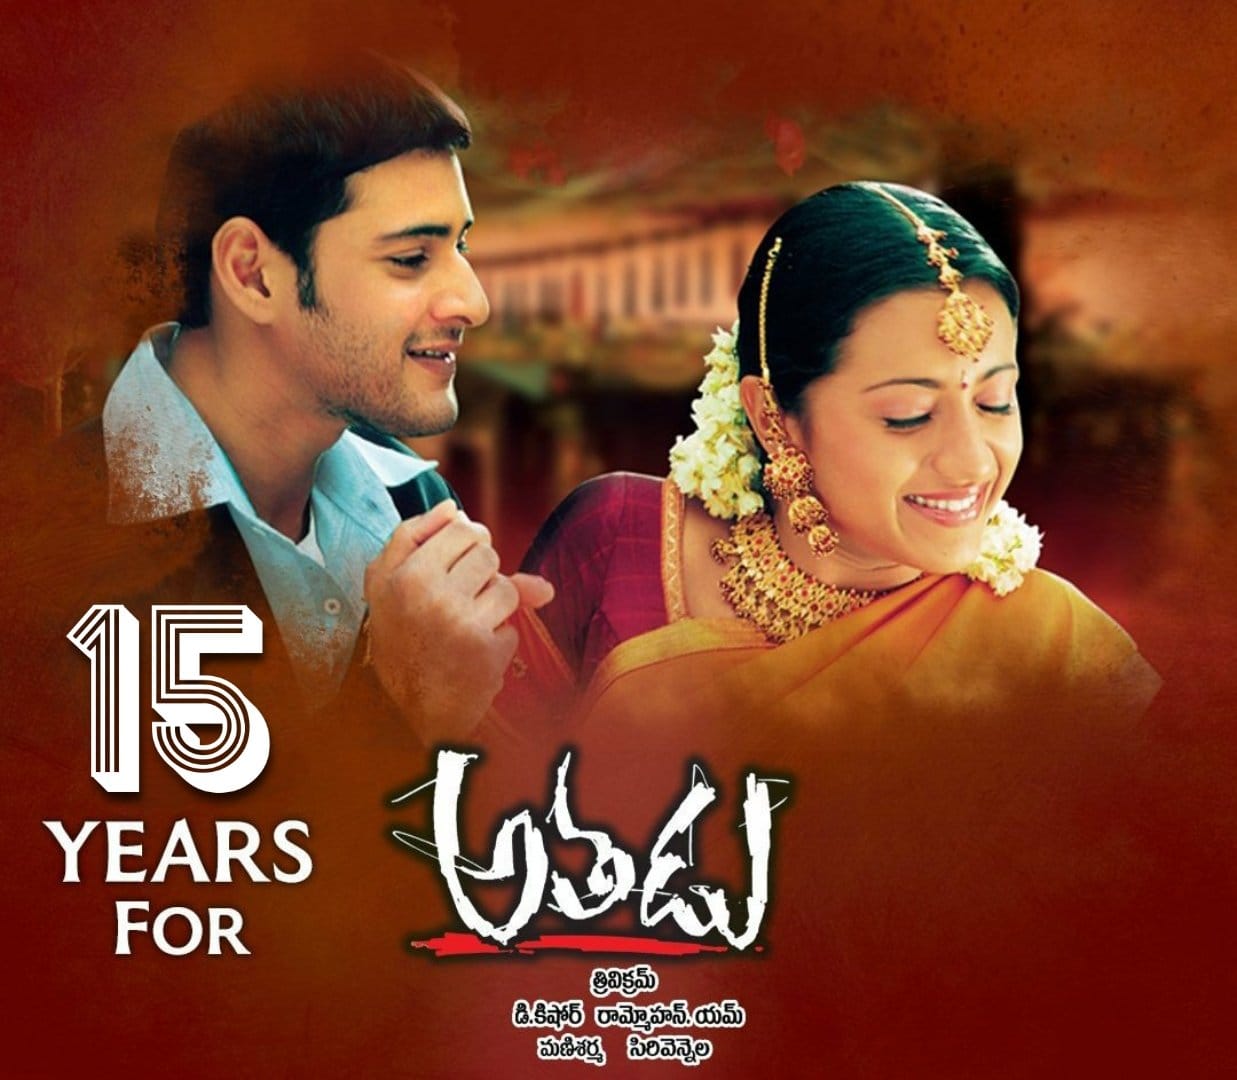 15 years of Athadu